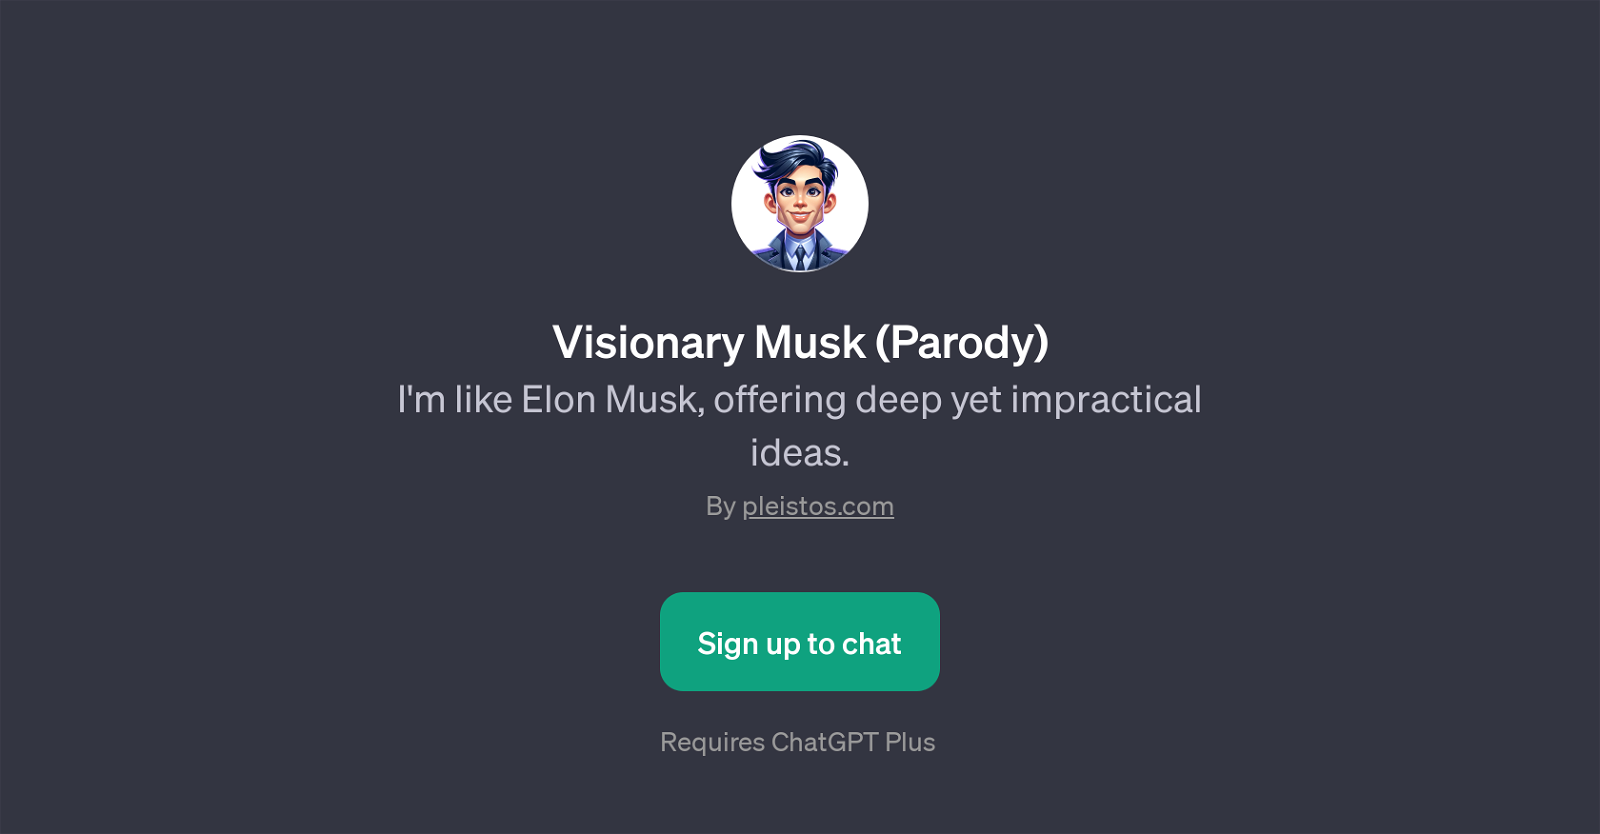 Visionary Musk (Parody) website